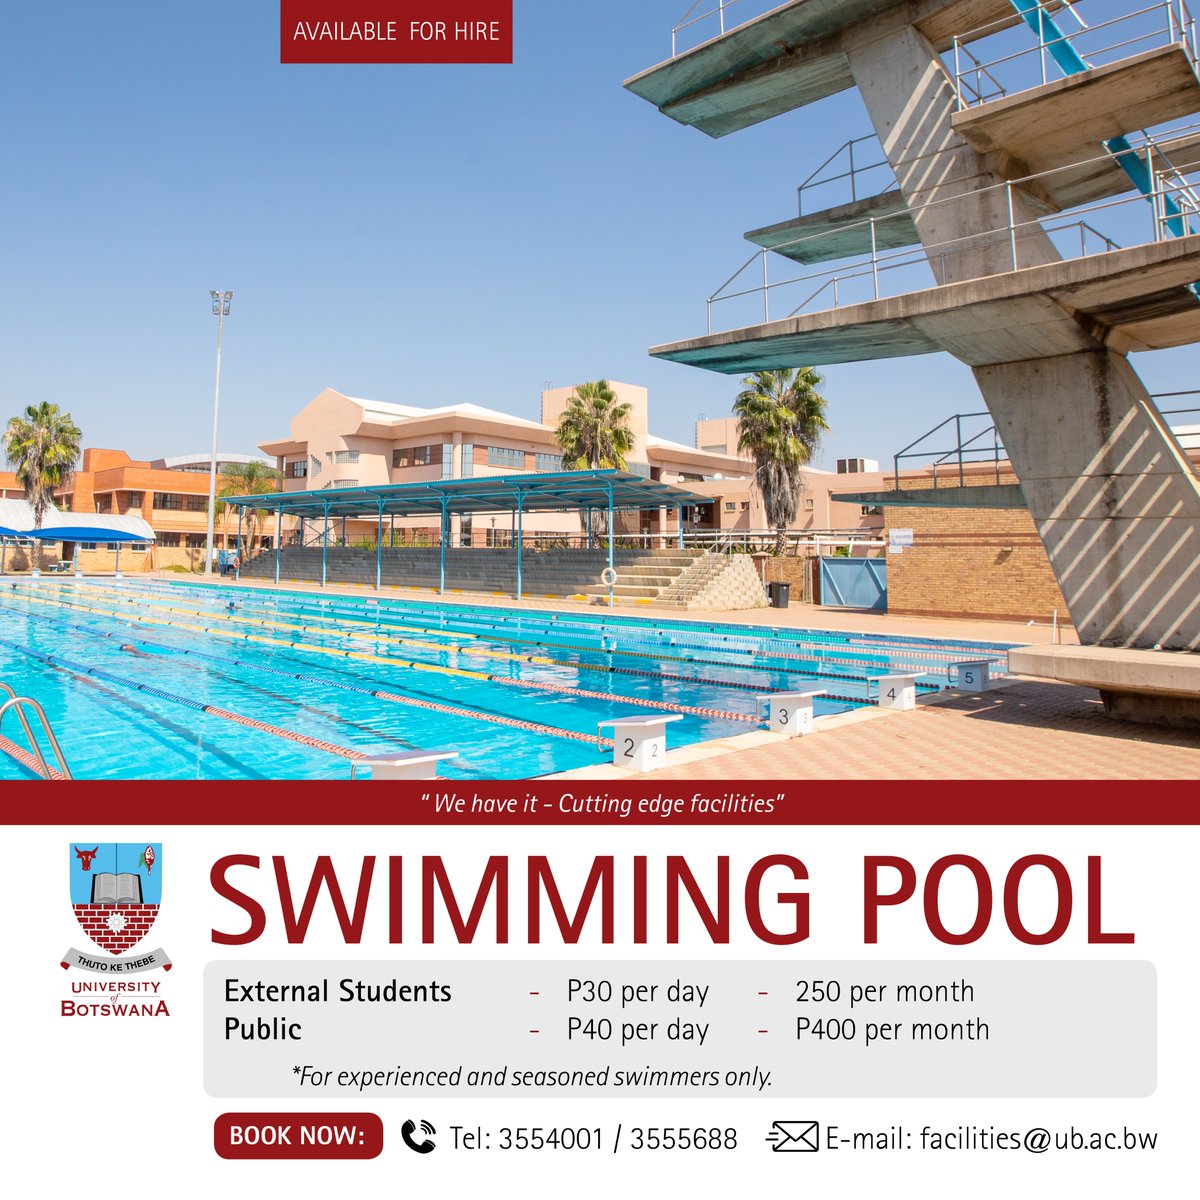 #AvailableForHire UB Swimming Pool